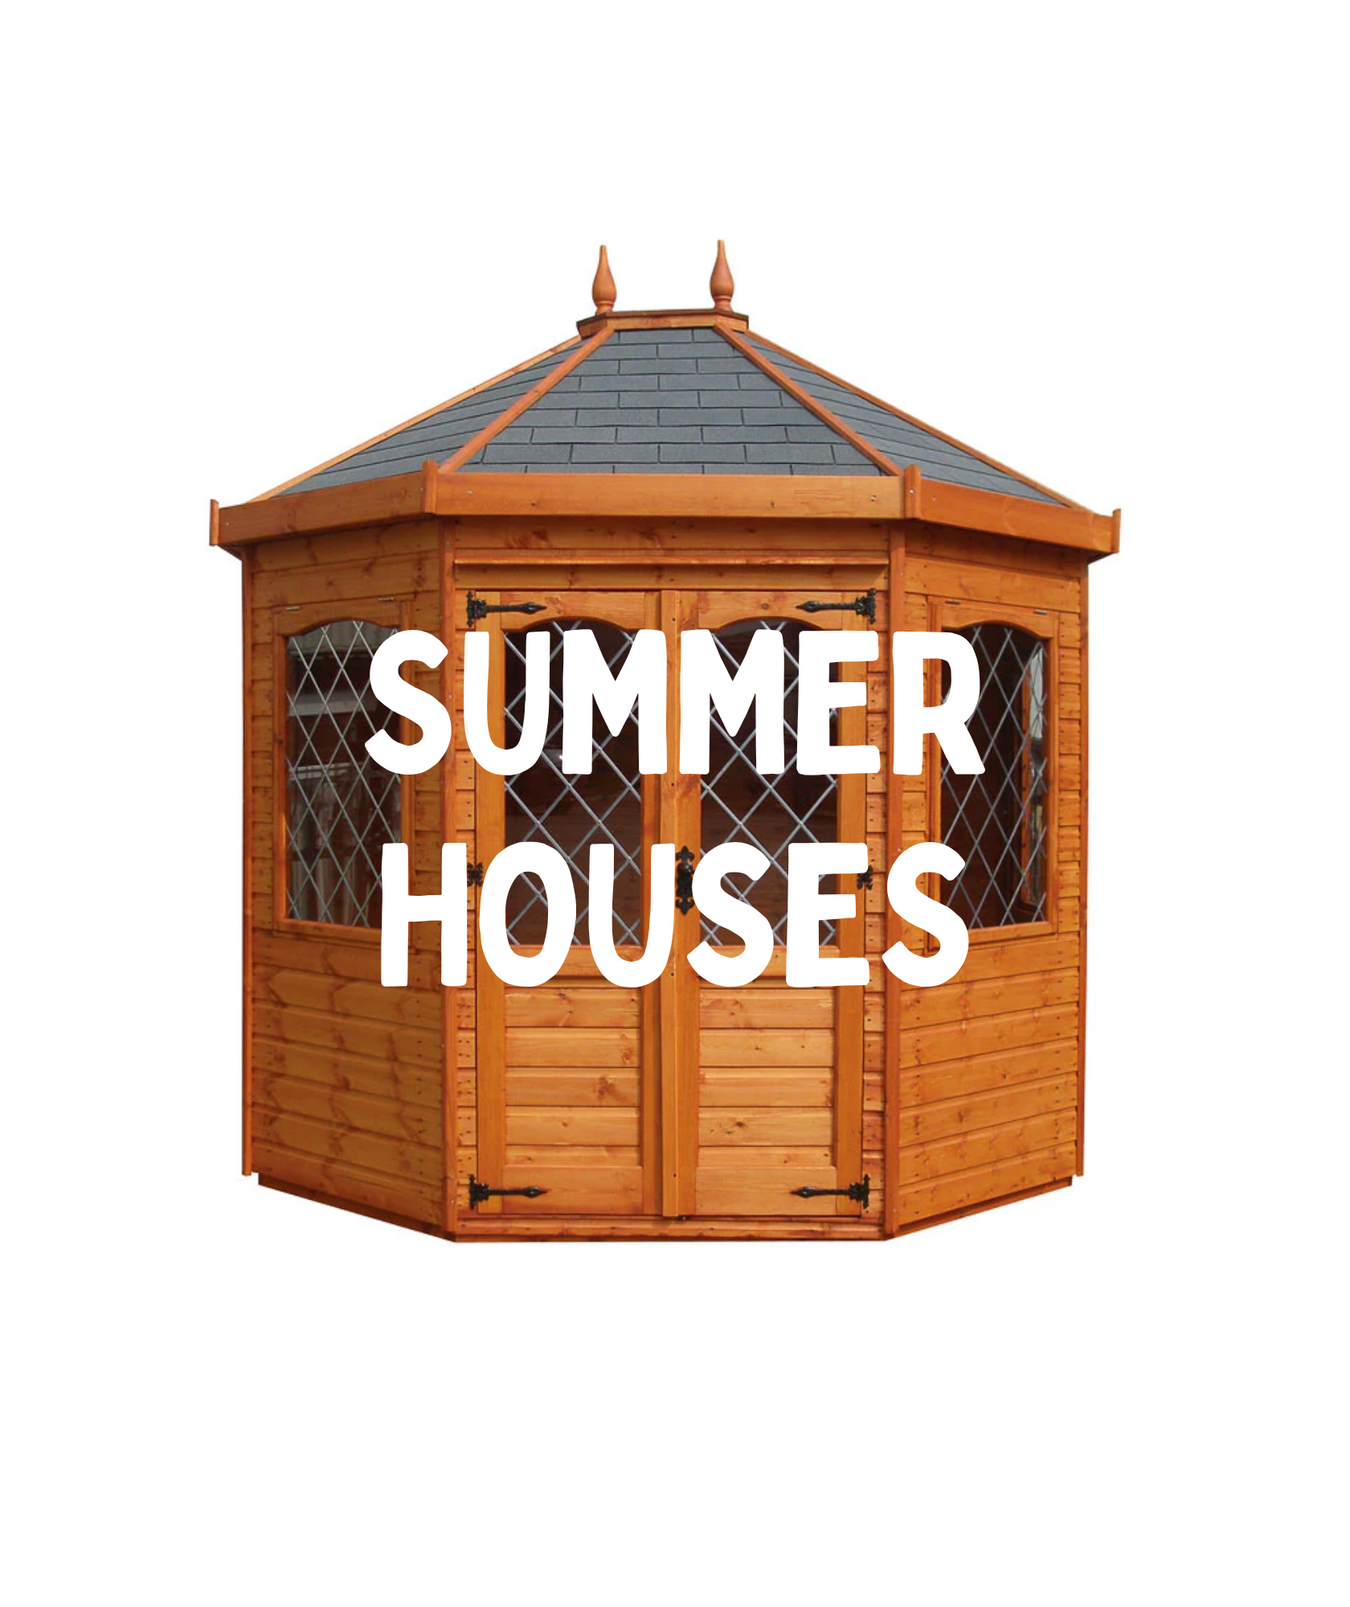 Summerhouses